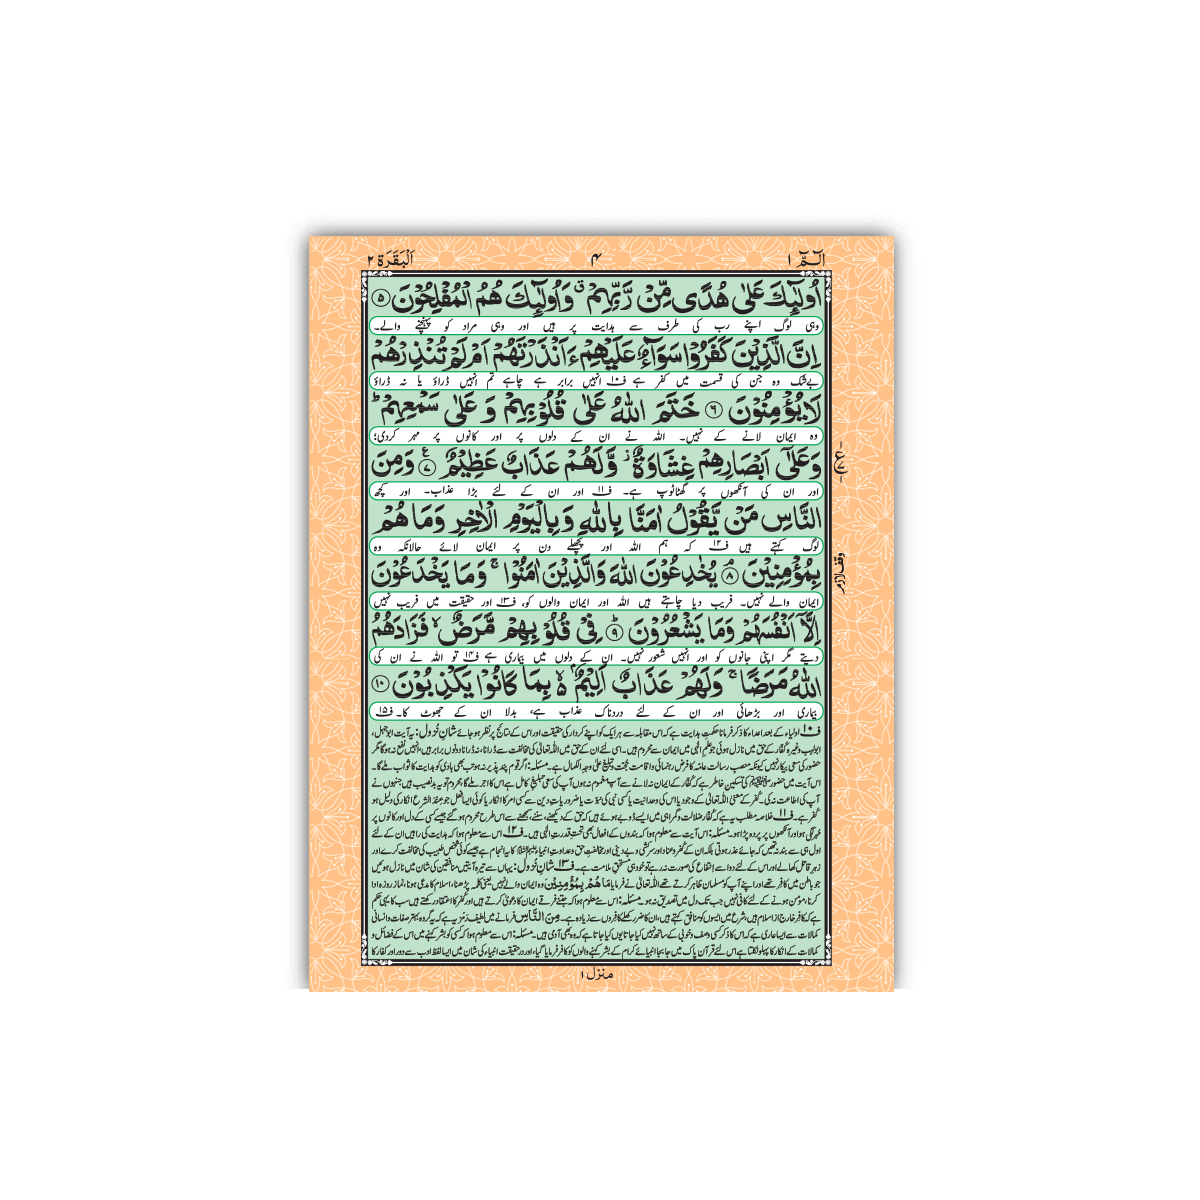 [92/QB] Al-Quran-Ul-Kareem With Kanzul Iman & Khazain-Ul-Irfan (Urdu Translation) - Gift Edition